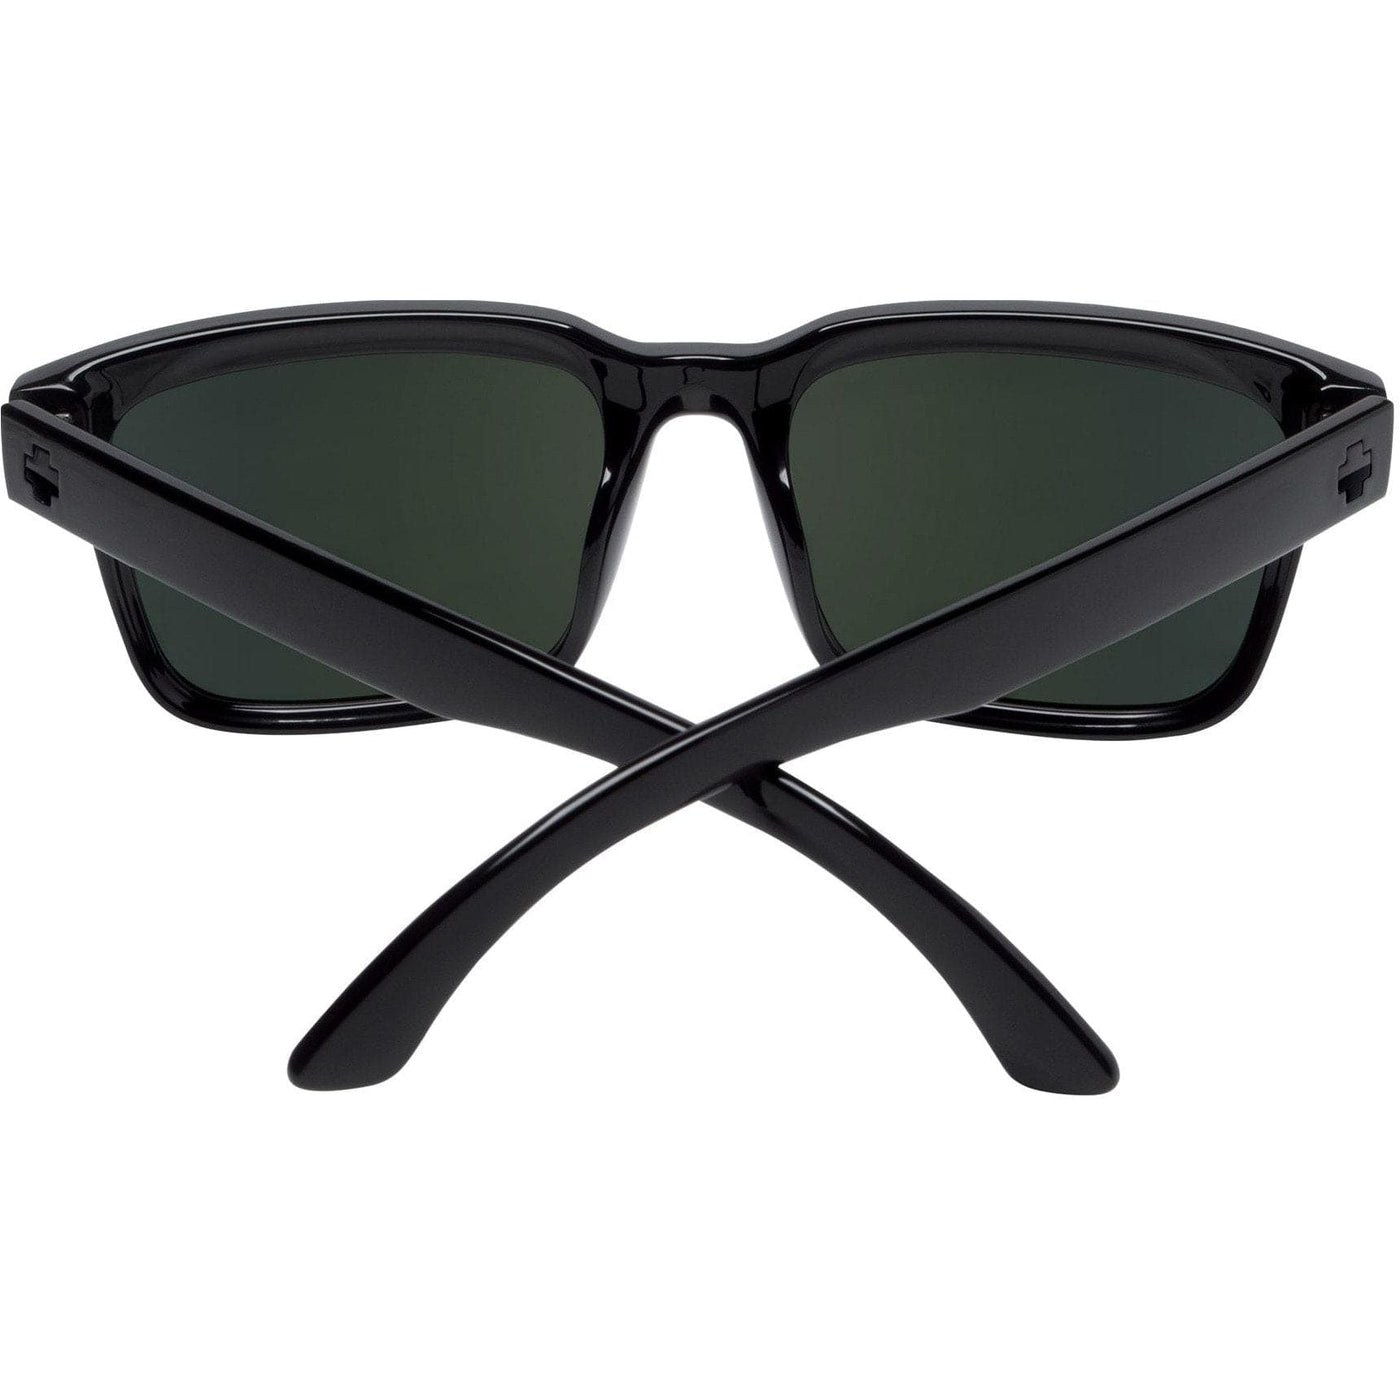 SPY HELM 2 Polarized Sunglasses - SOSI Gloss Black 8Lines Shop - Fast Shipping